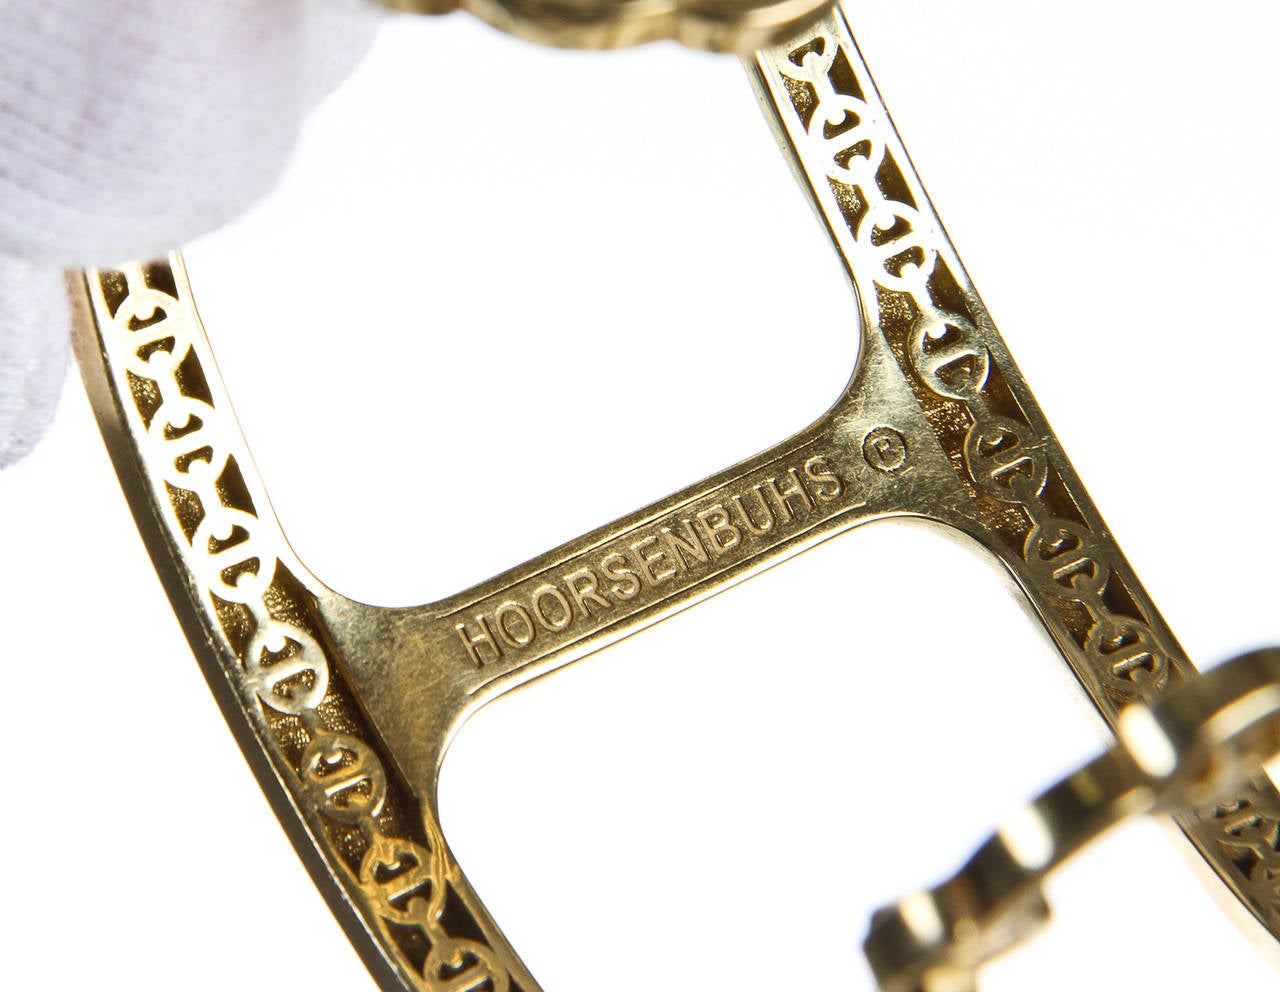 Hoorsenbuhs Gold Phantom Cuff Bracelet 2